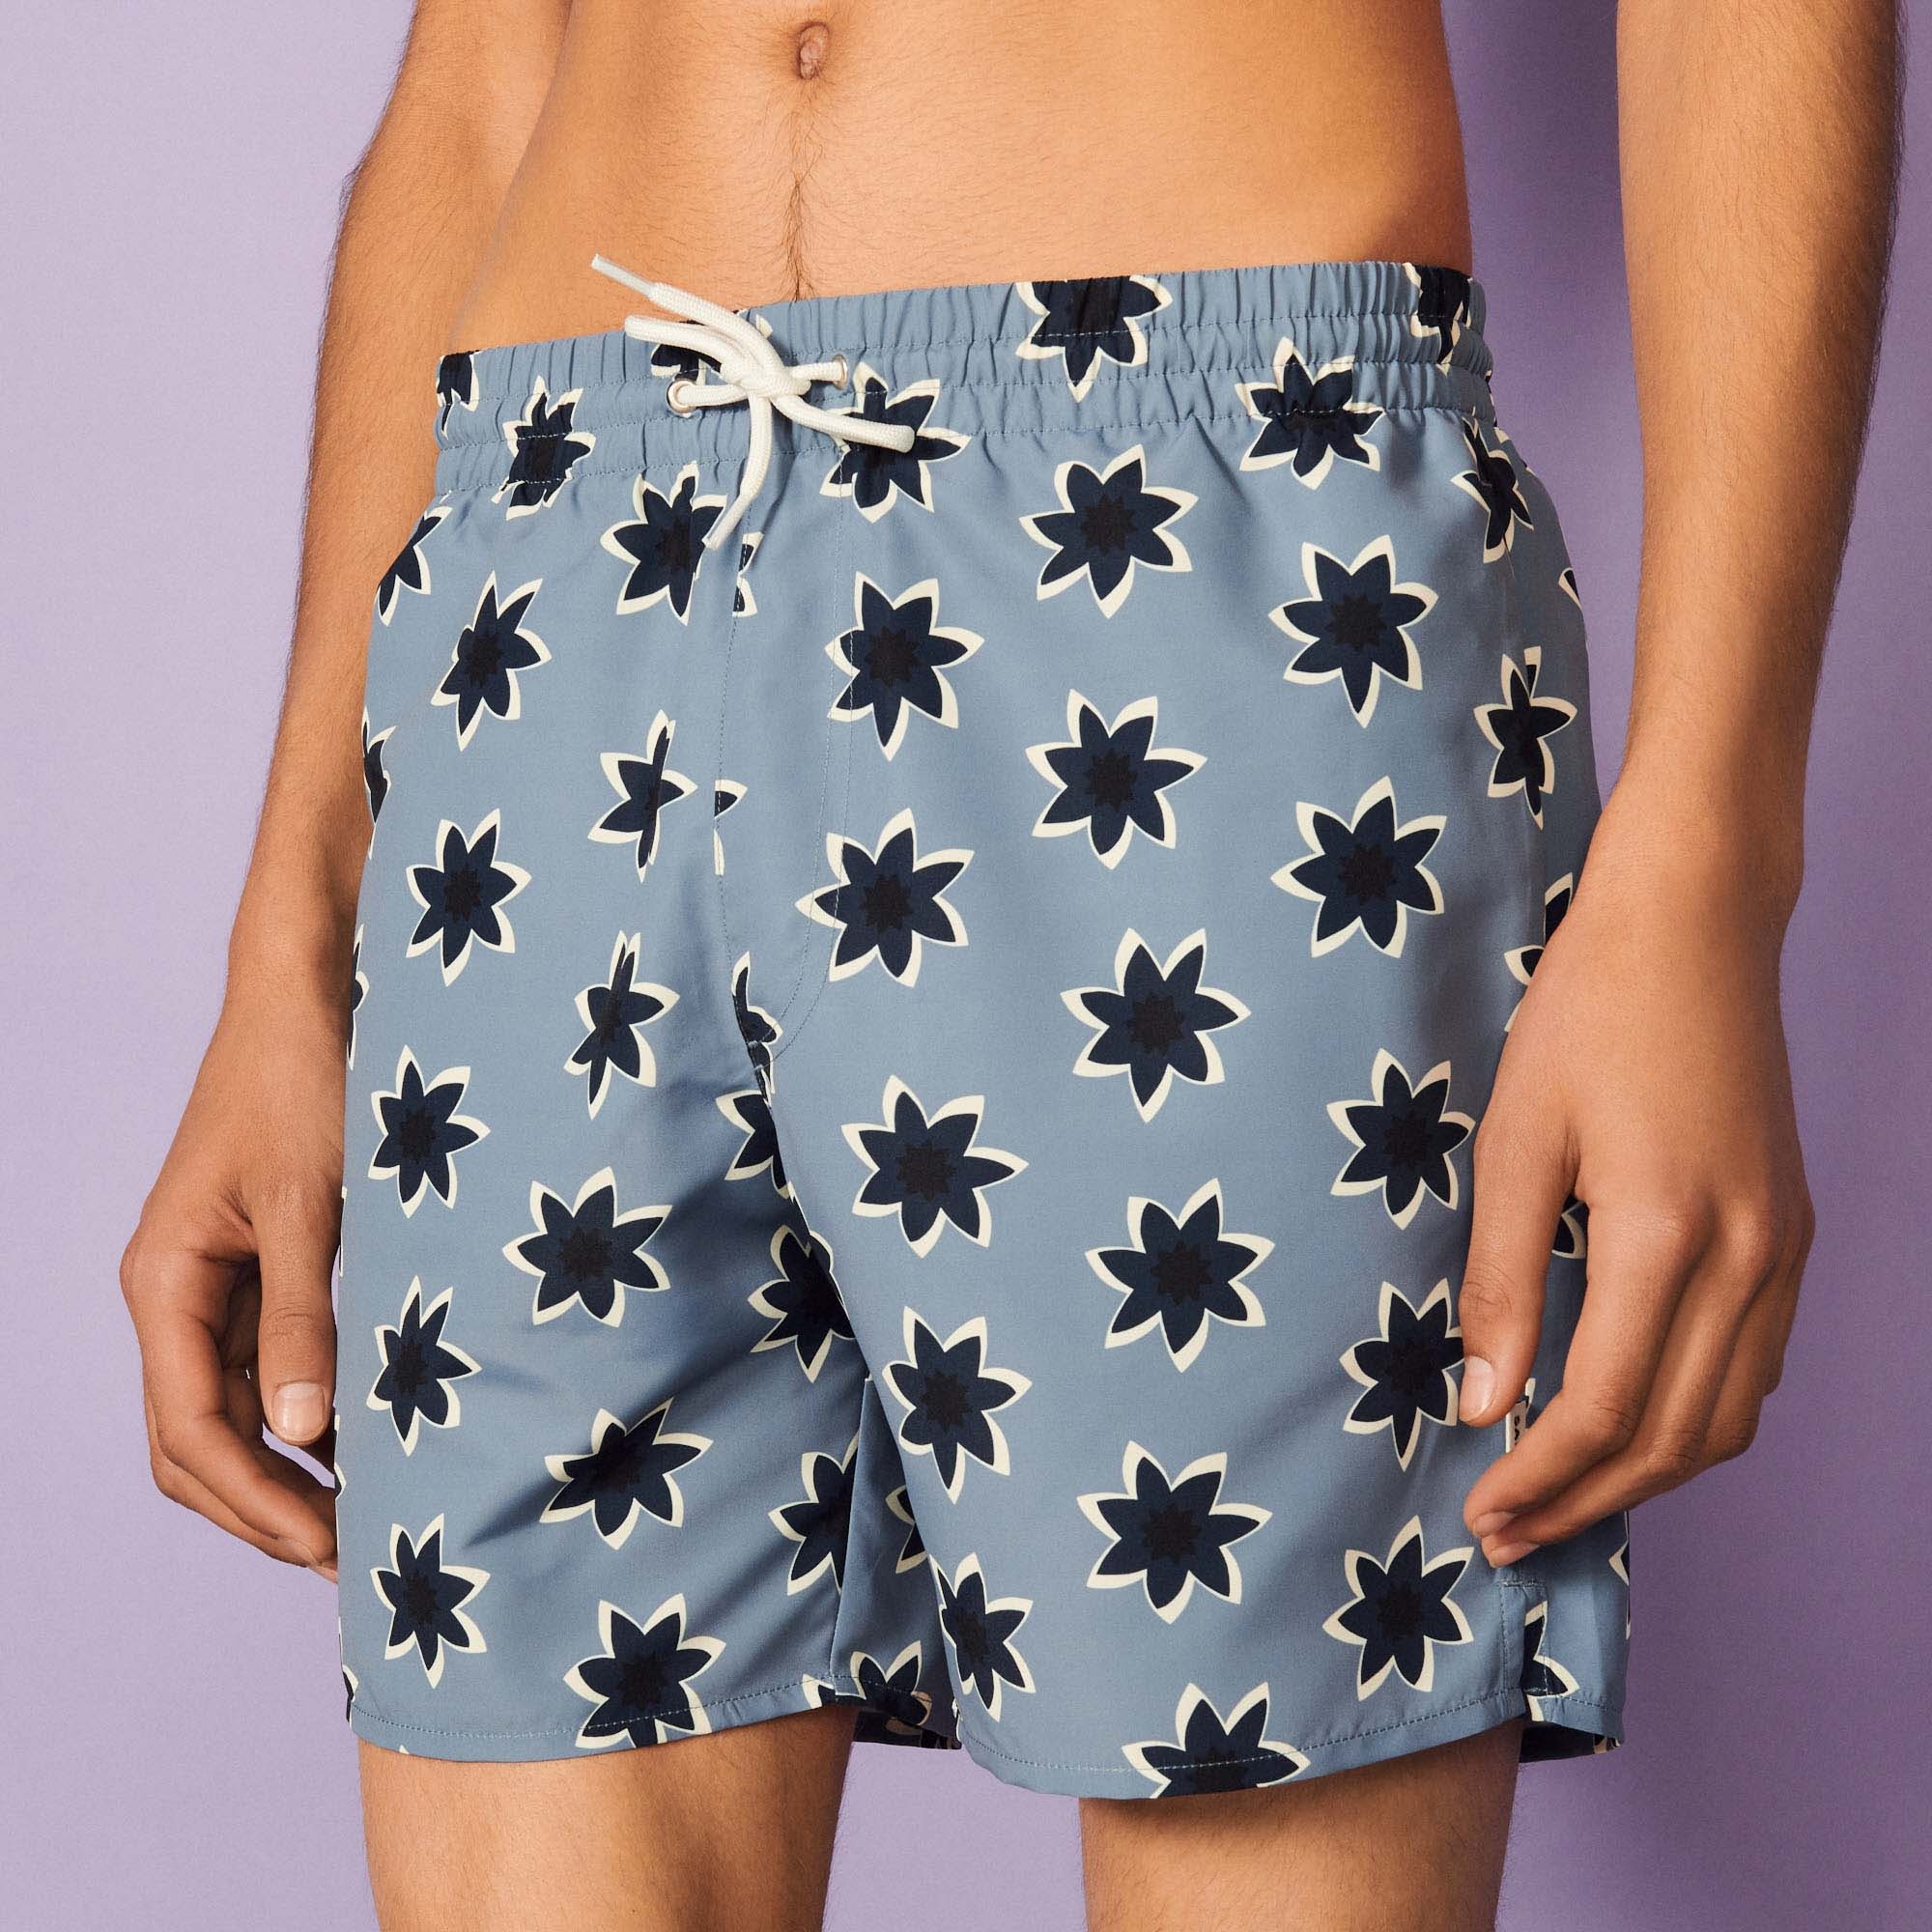 Floral print swim shorts - 5